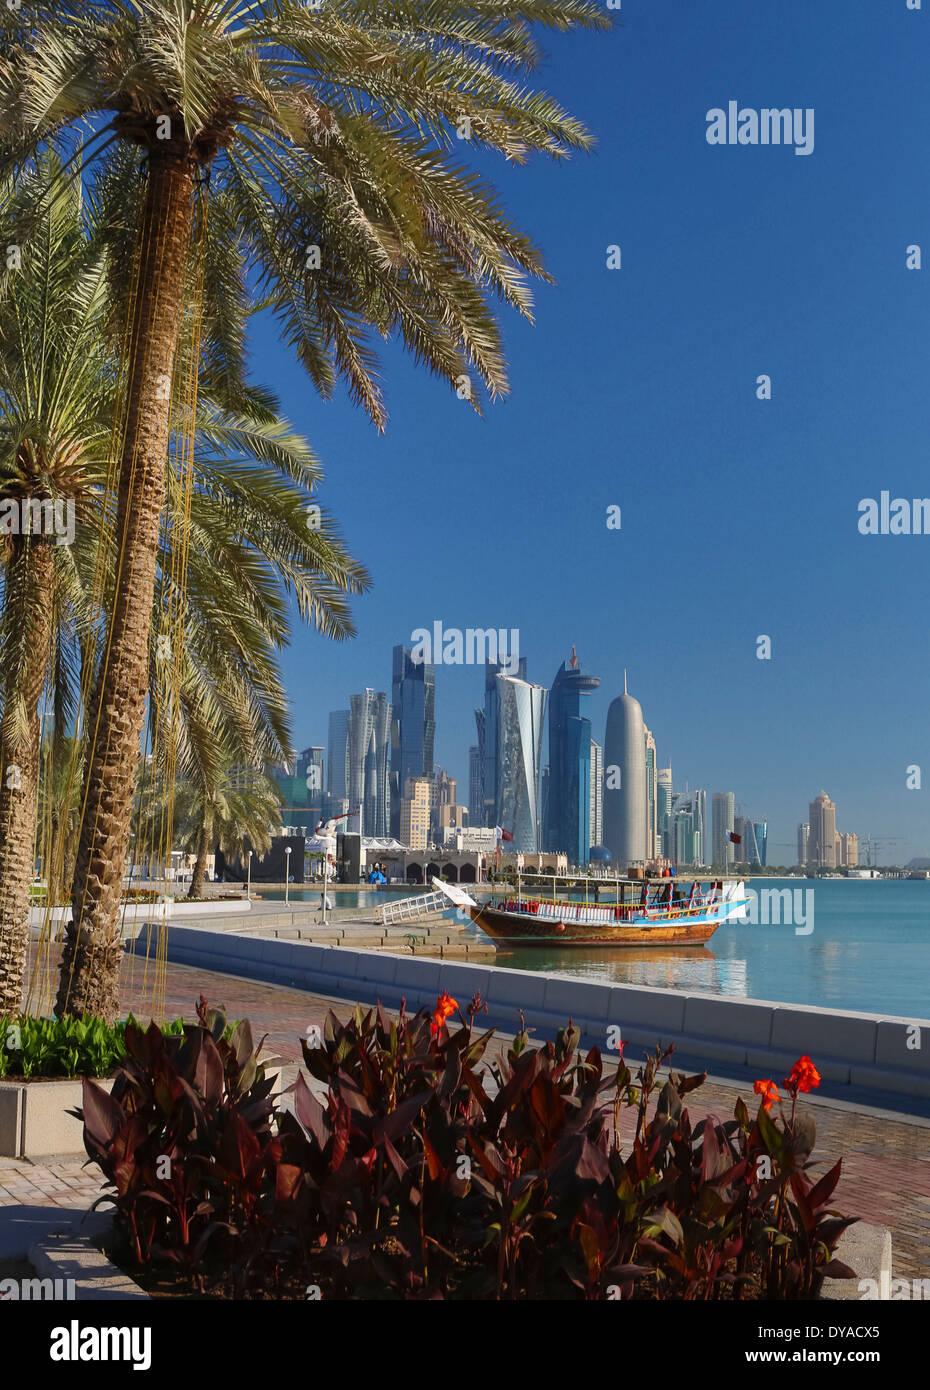 Al Bidda Burj Doha Katar Nahost World Trade Center Architektur Bucht Boot Stadt bunte Corniche futuristische Palm Tree p Stockfoto